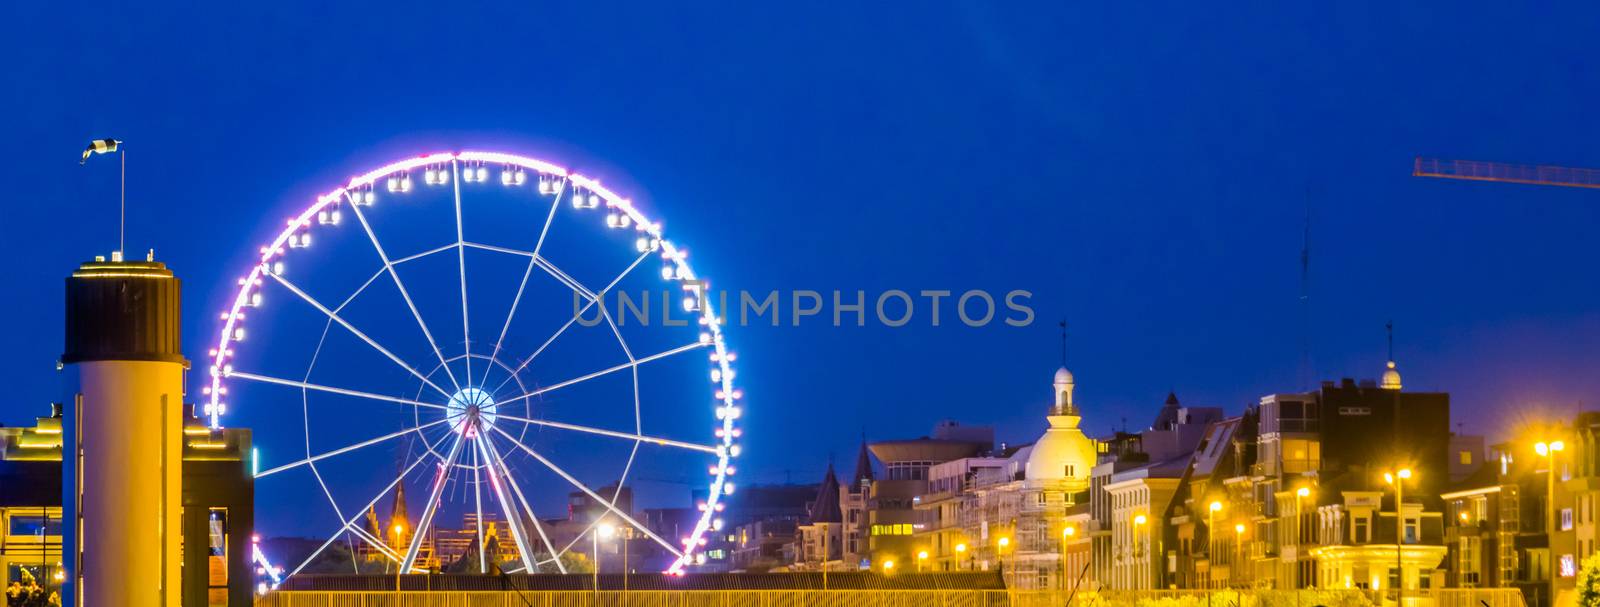 skyline of antwerp city with the ferris wheel lighted at night, Antwerpen, Belgium